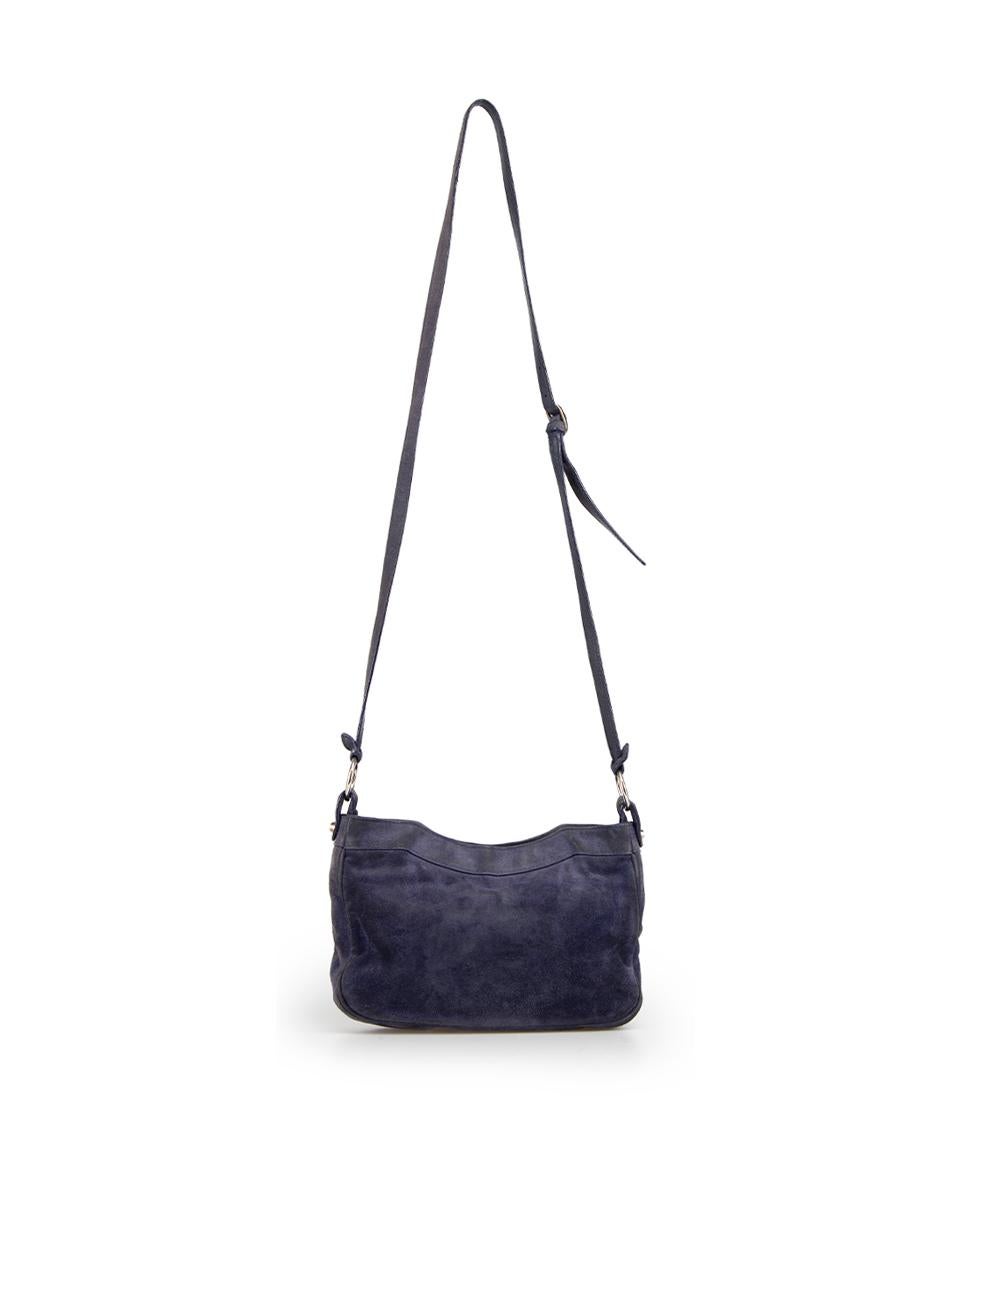 Balenciaga Women's Purple Suede Crossbody Bag In Good Condition For Sale In London, GB